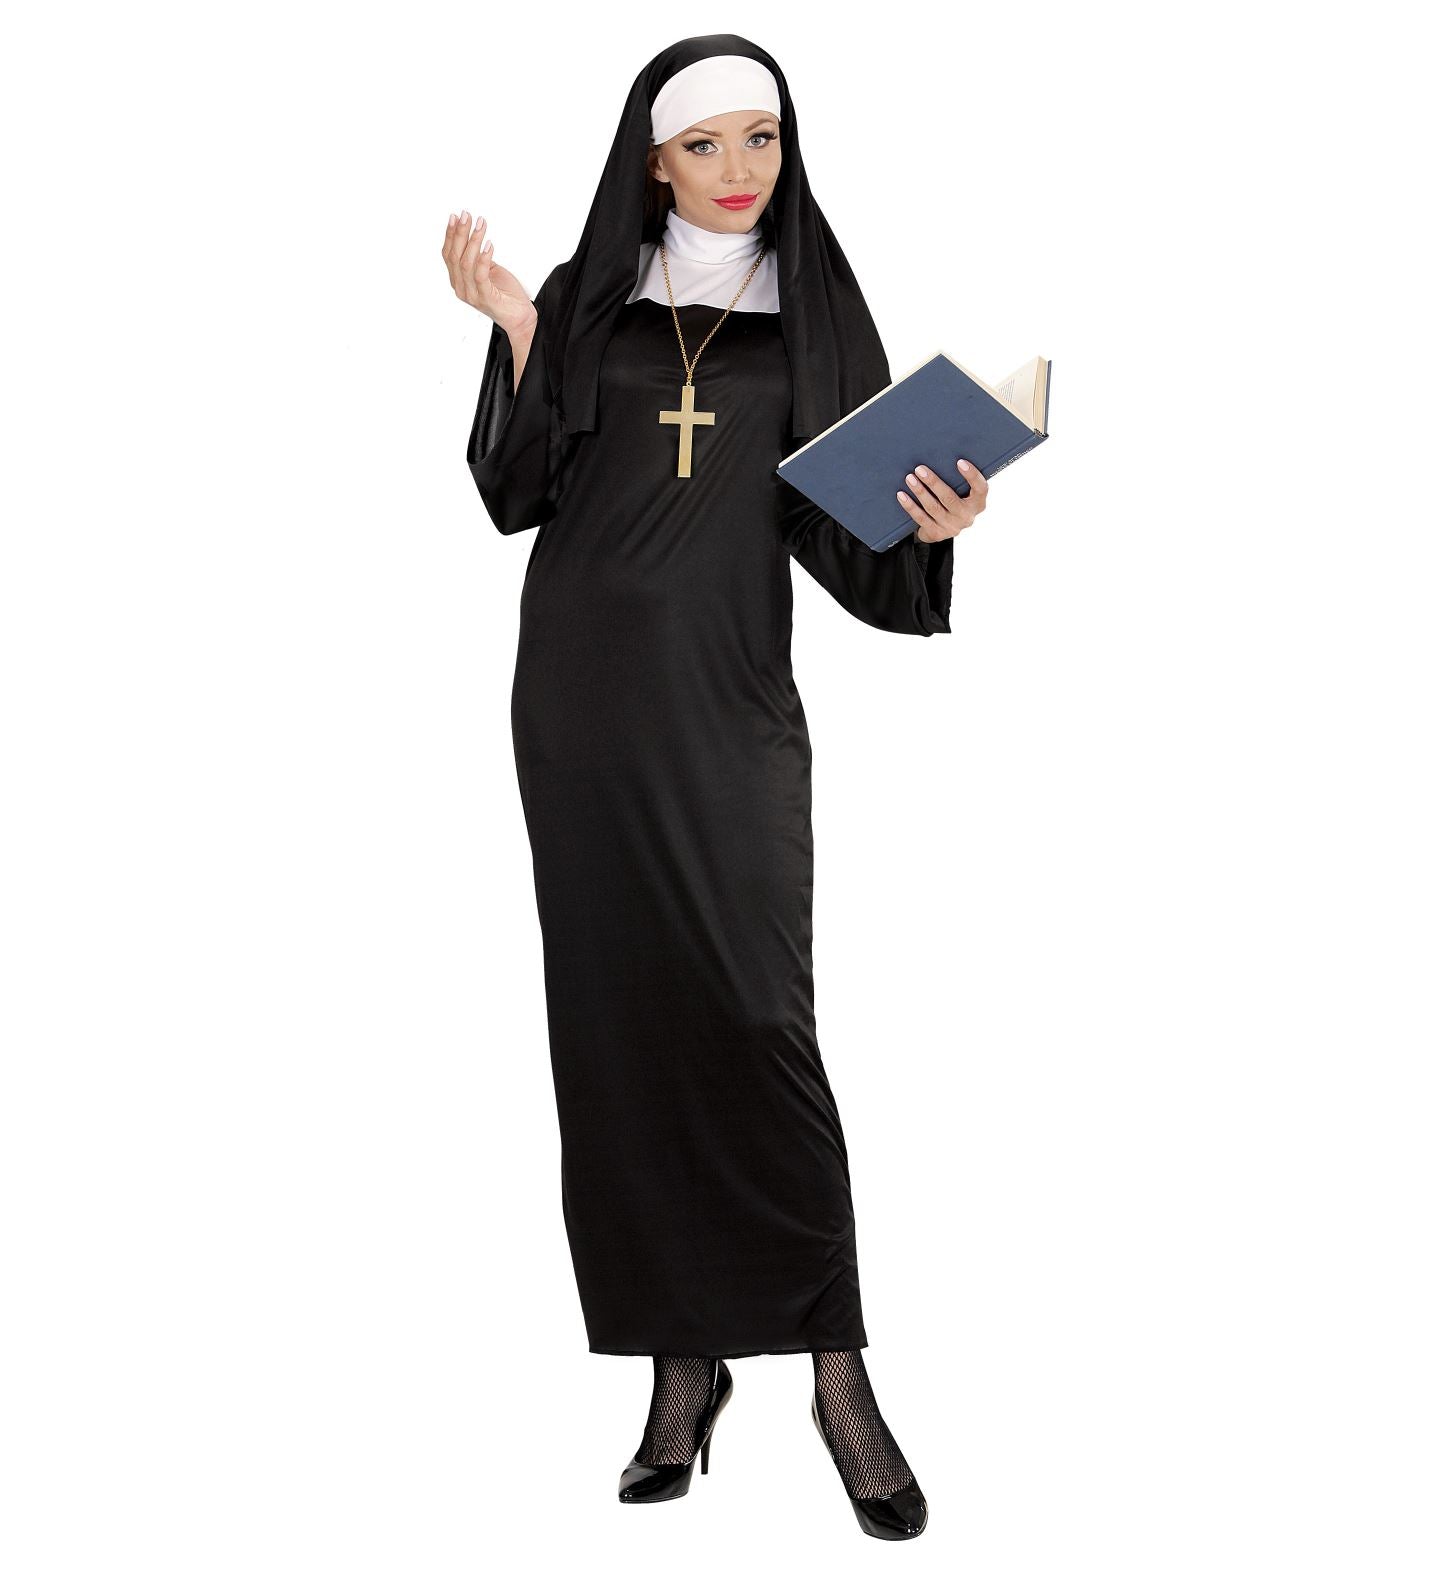 Nun fancy dress outfit Adult